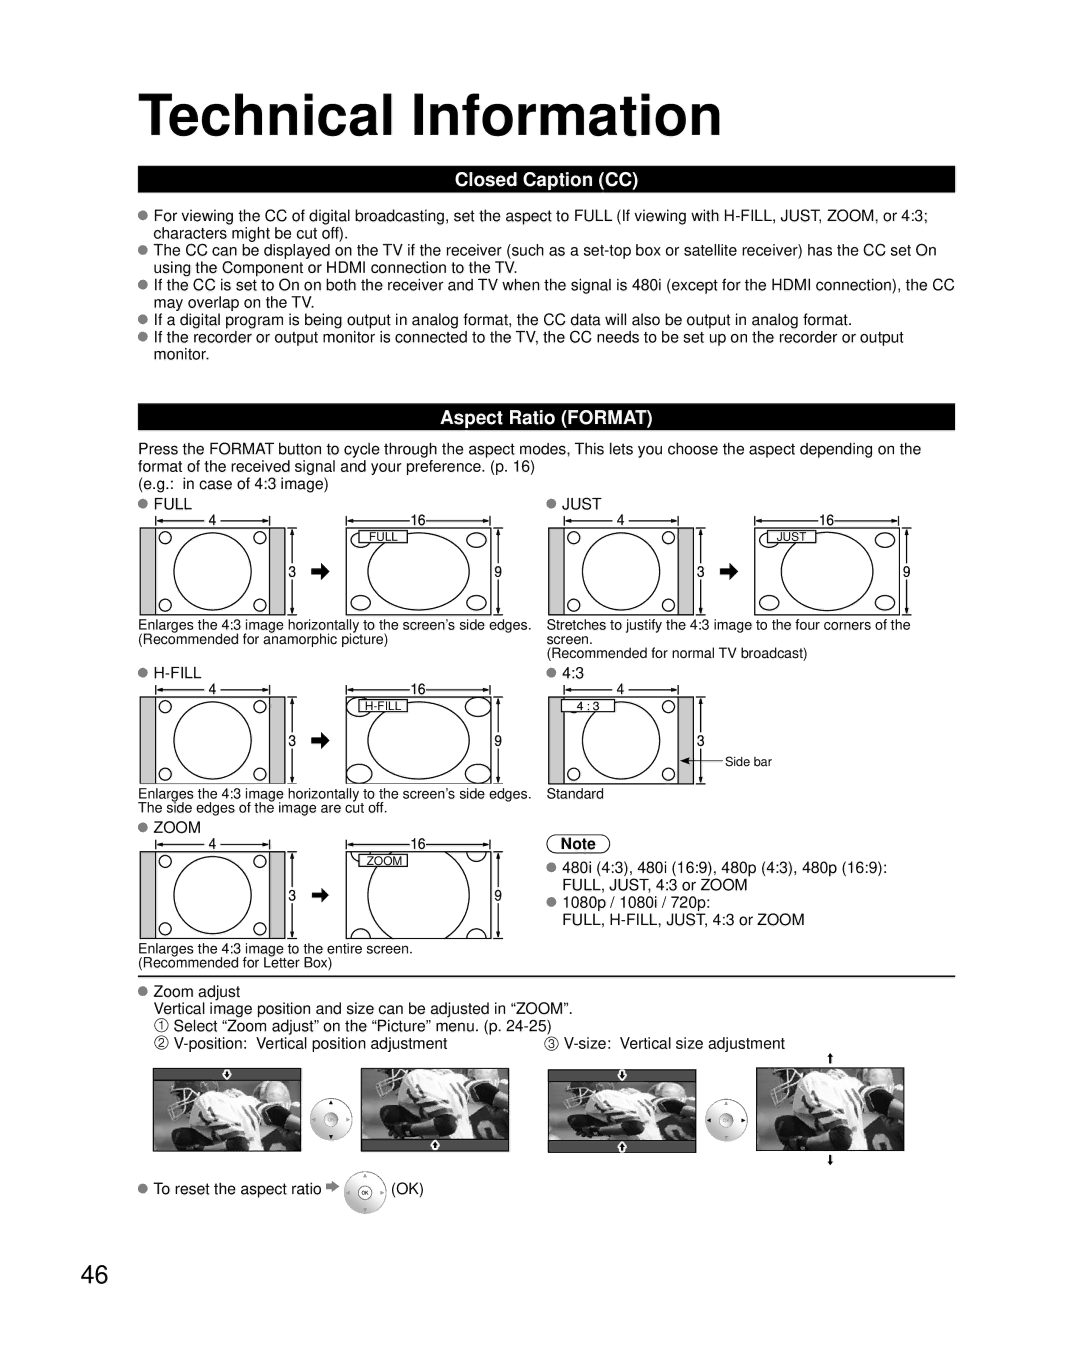 Panasonic TC-32LZ800 quick start Technical Information, Closed Caption CC, Aspect Ratio Format 